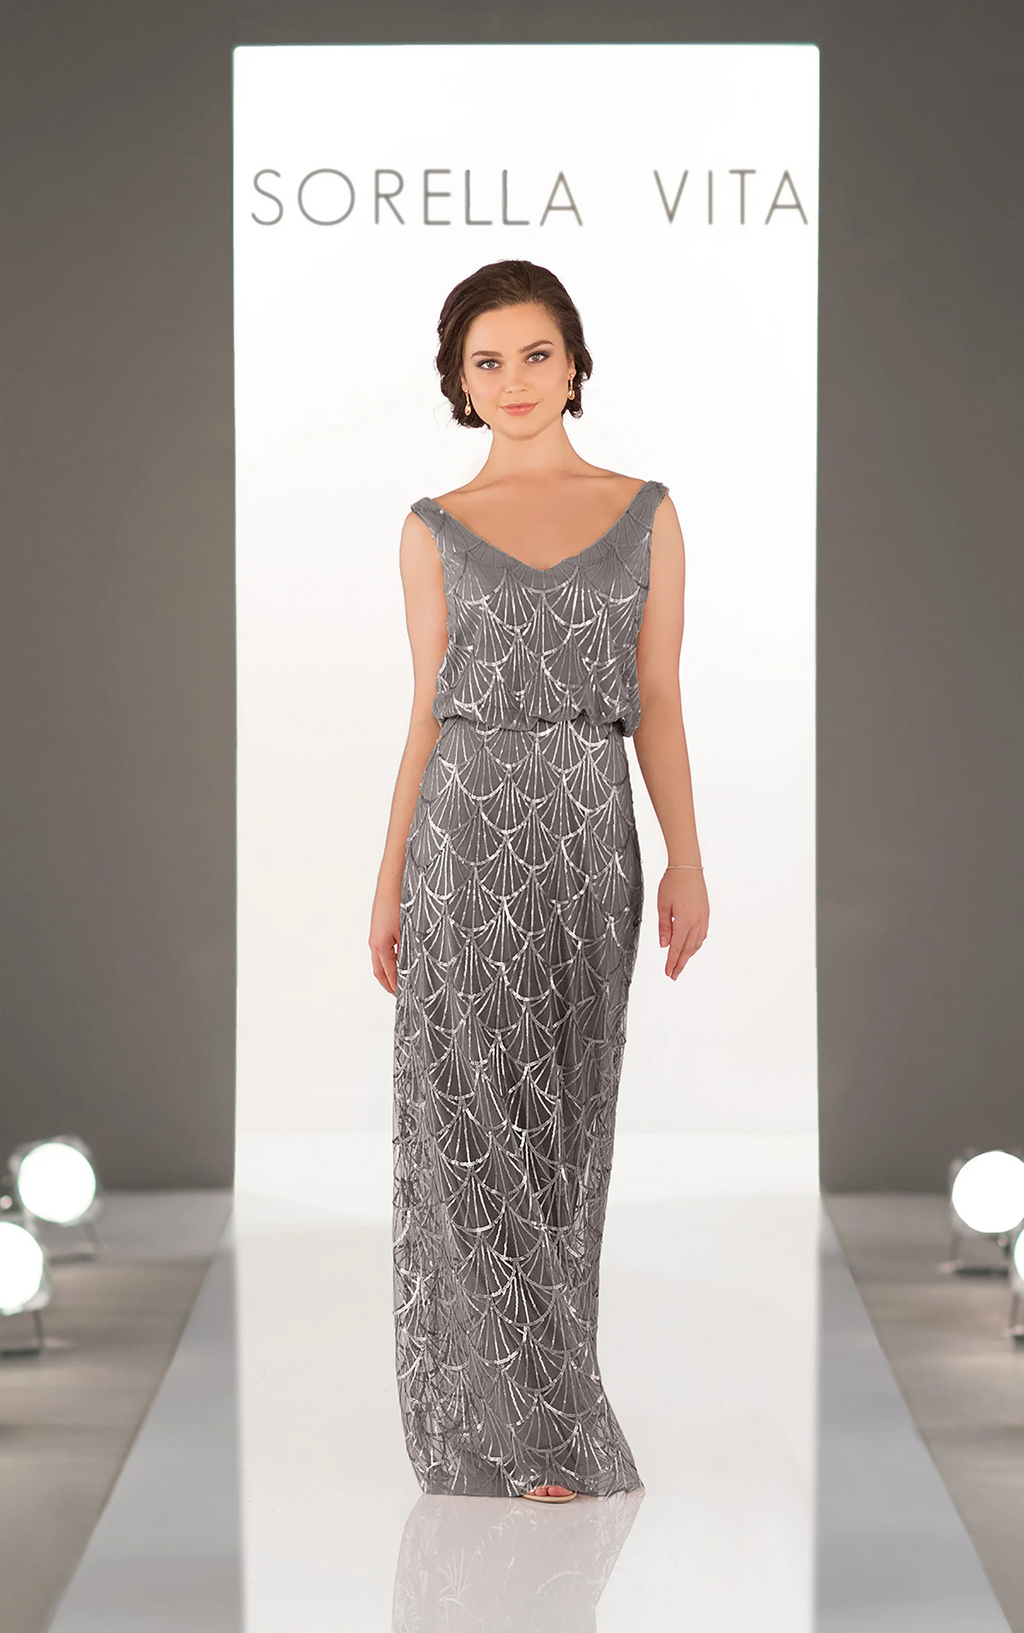 Sorella Vita Dress Style 9062 (Platinum-Size 14) Prom, Ball., Black-tie, Bridesmaid, Pageant